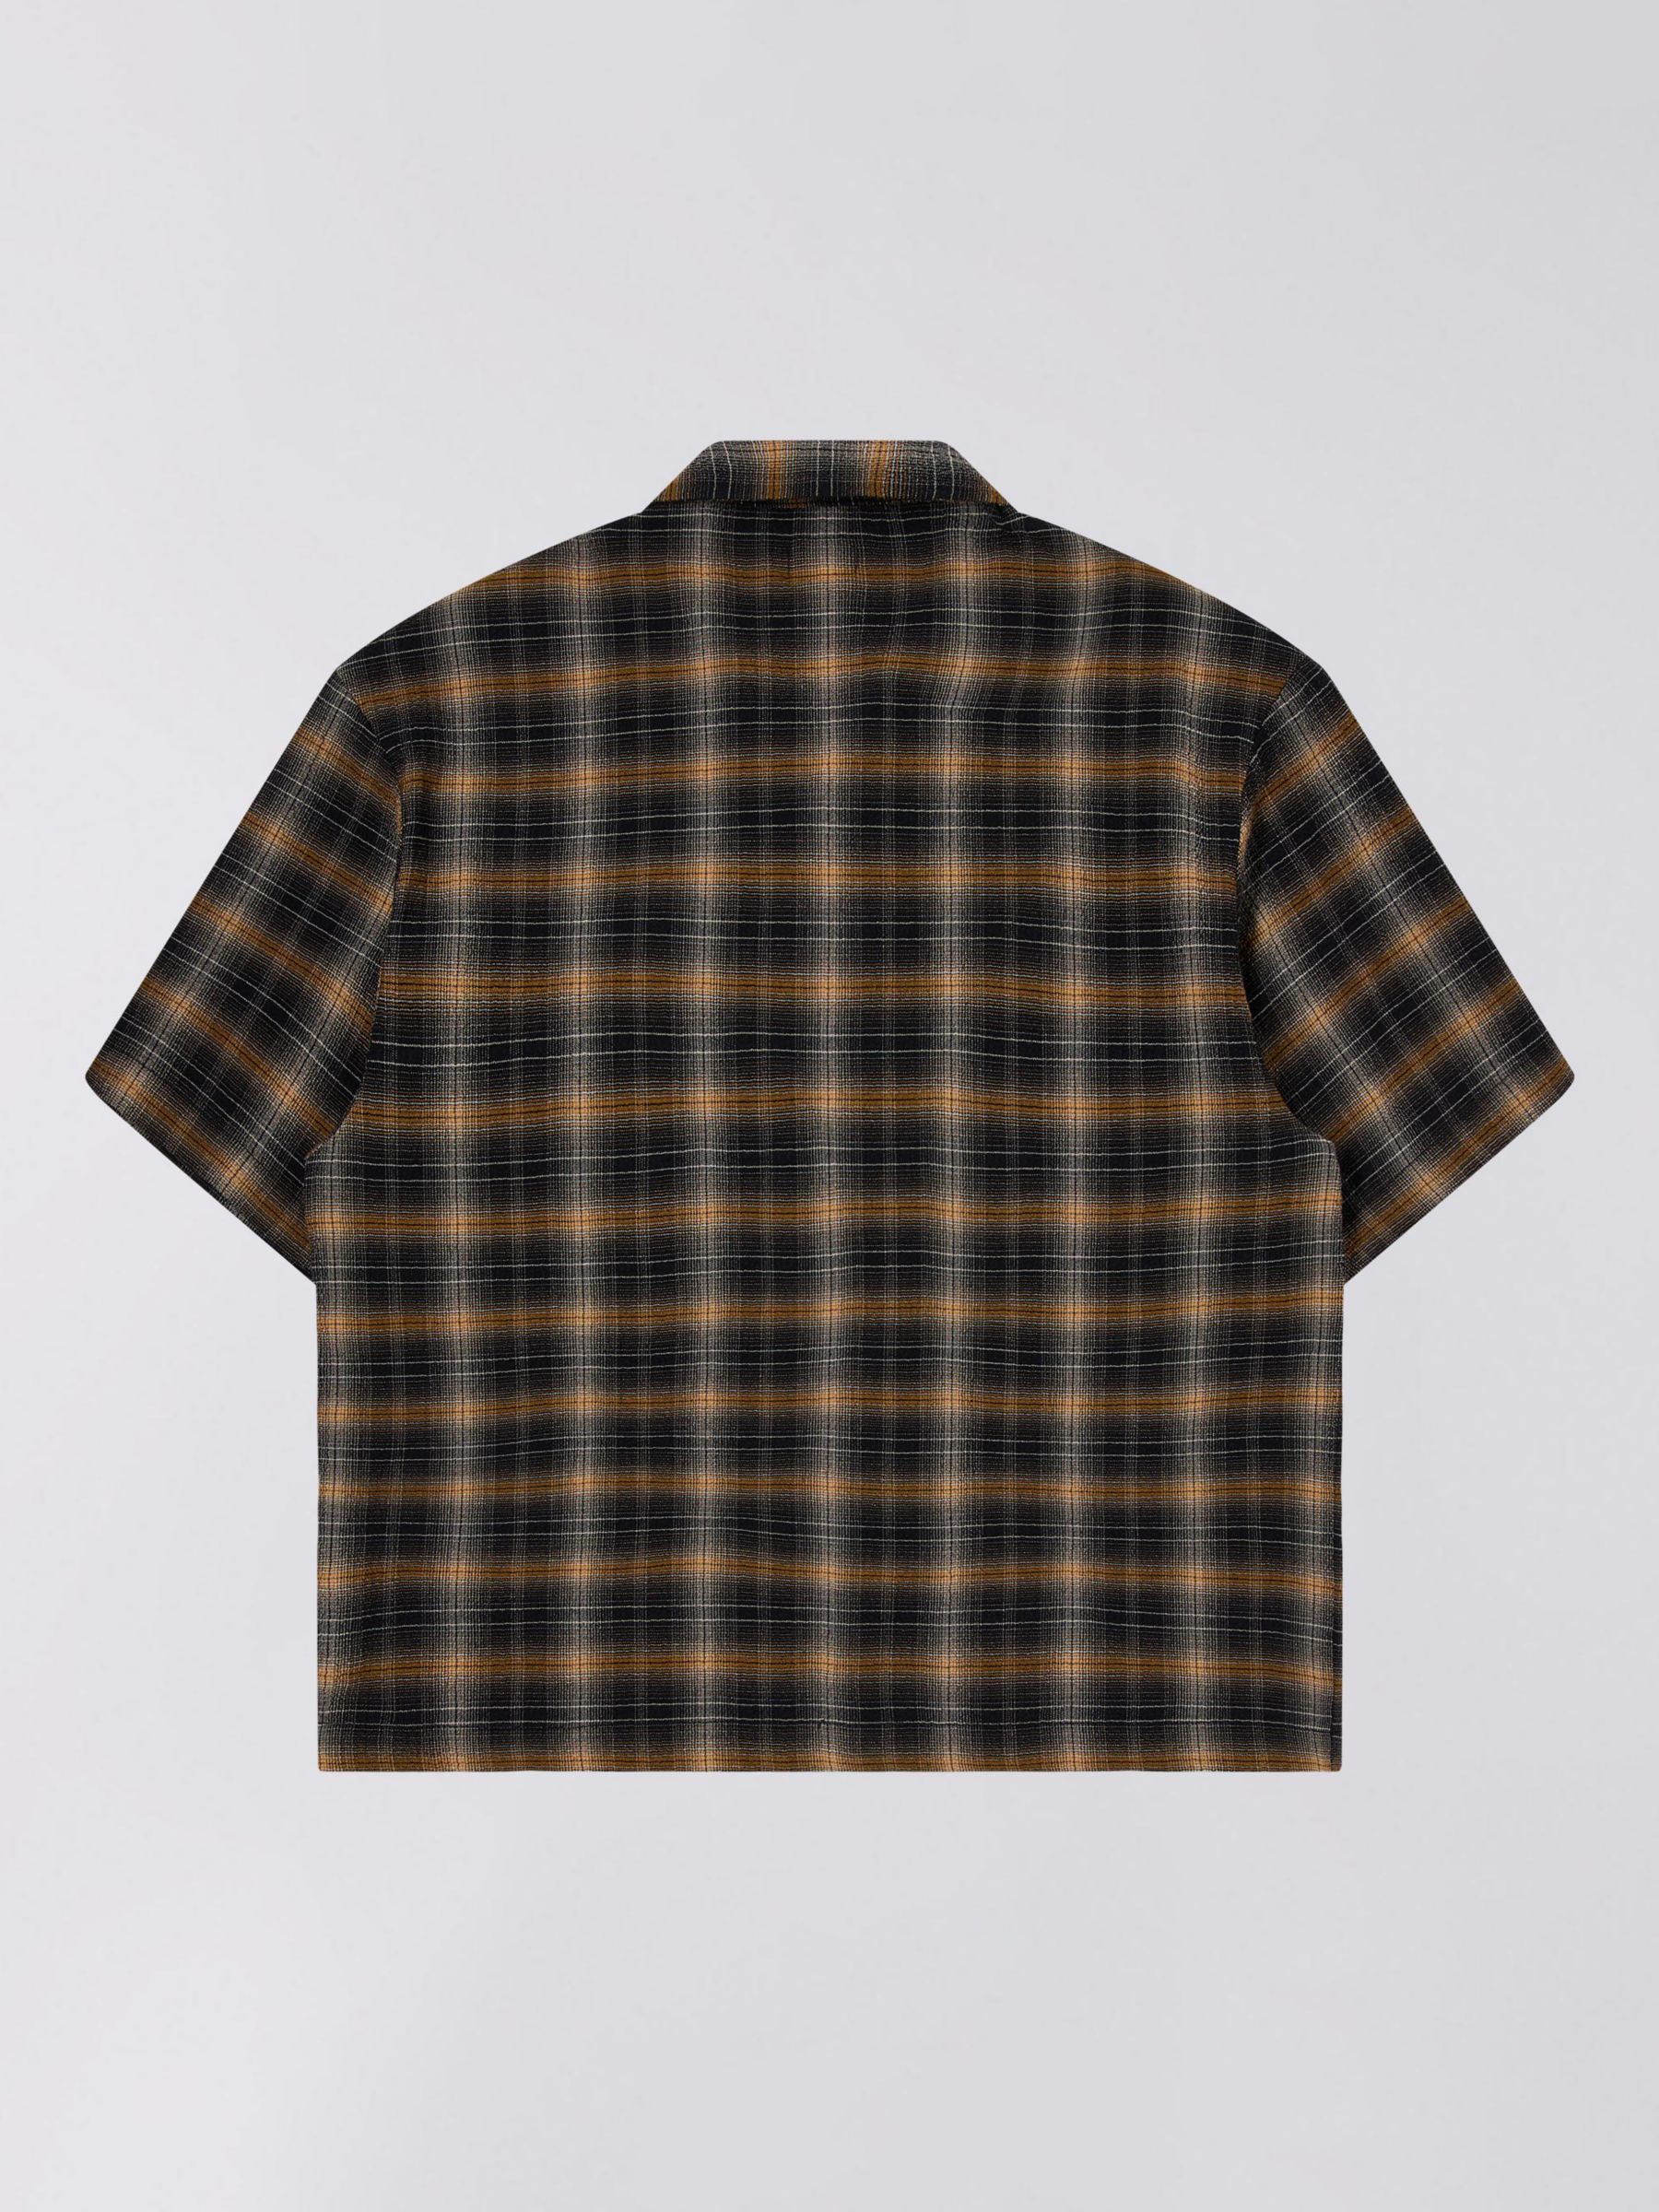 Edwin Saga Short Sleeve Check Seersucker Shirt, Black/Yellow, M